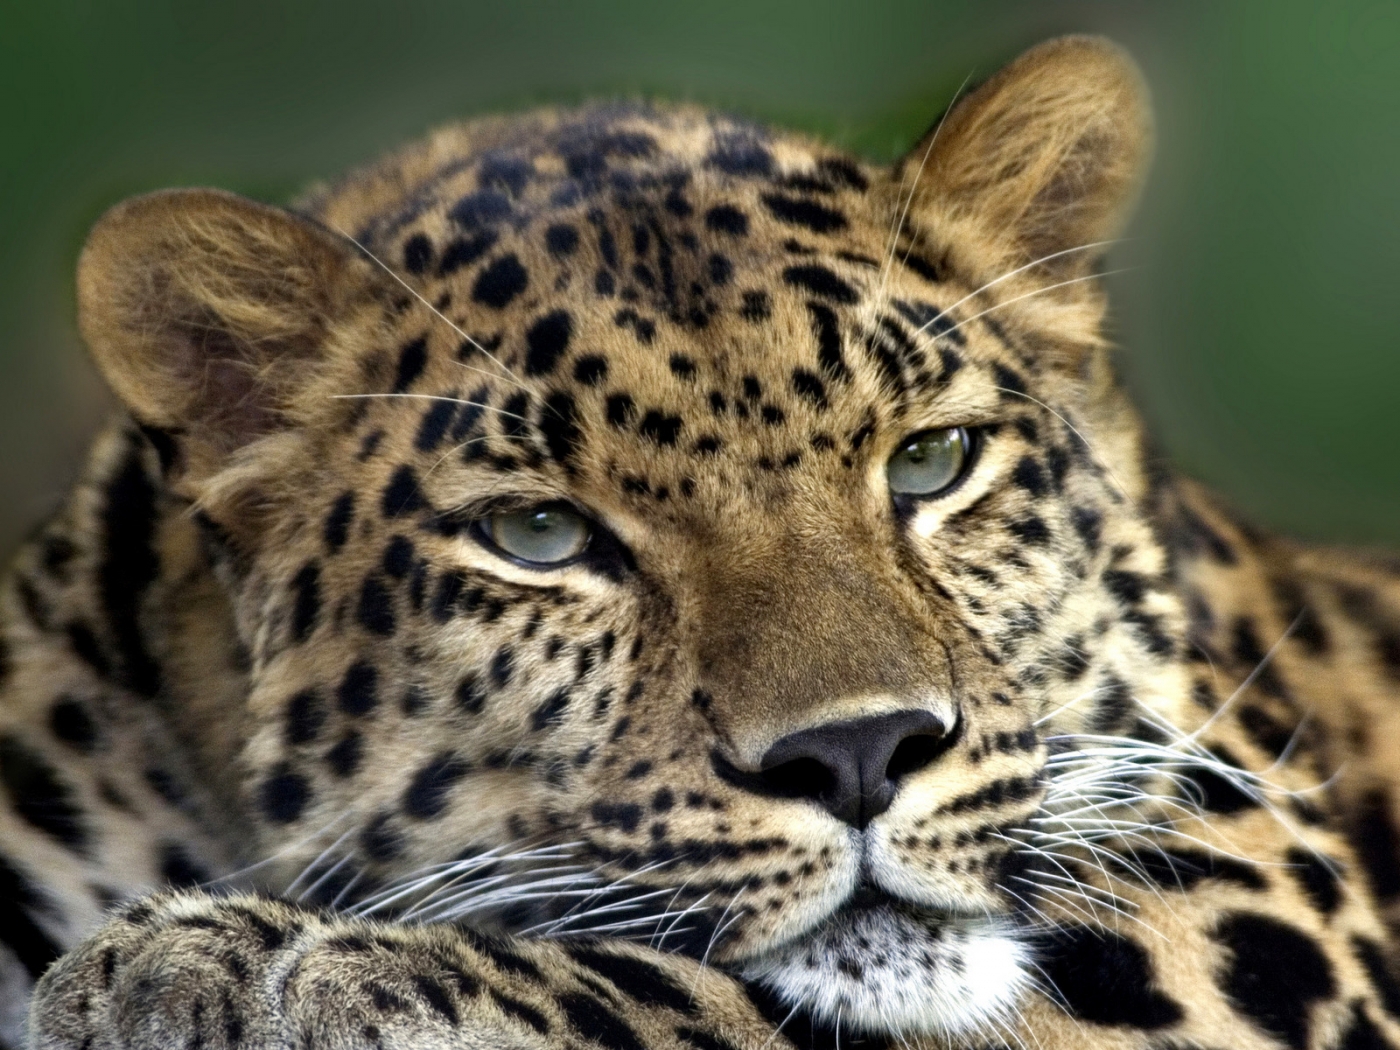 1080p Leopards Wallpaper